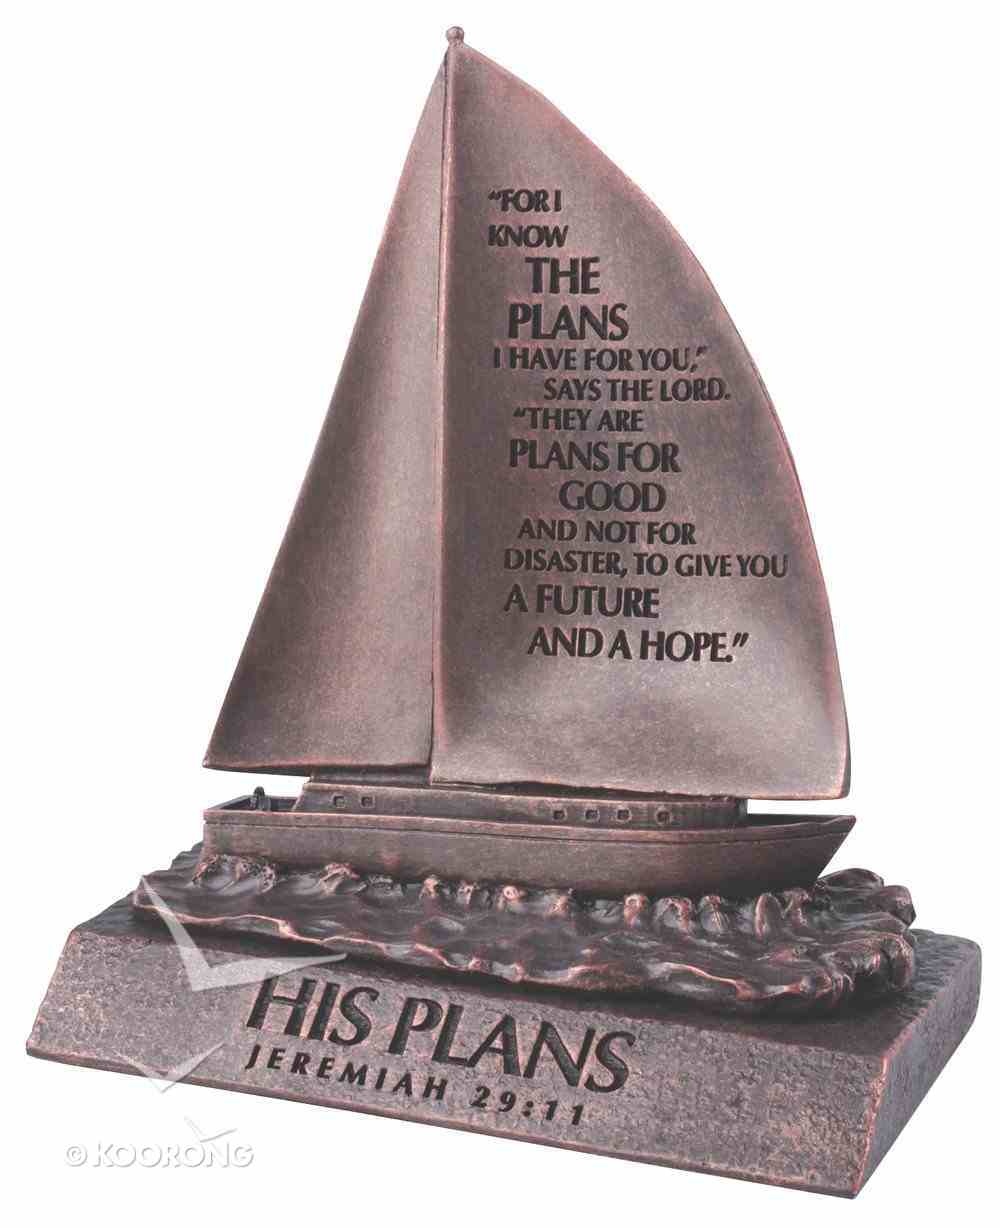 Moment of Faith Small Bronze Sculpture: His Plans Sailboat Cast Stone (Jer 29:11) Plaque